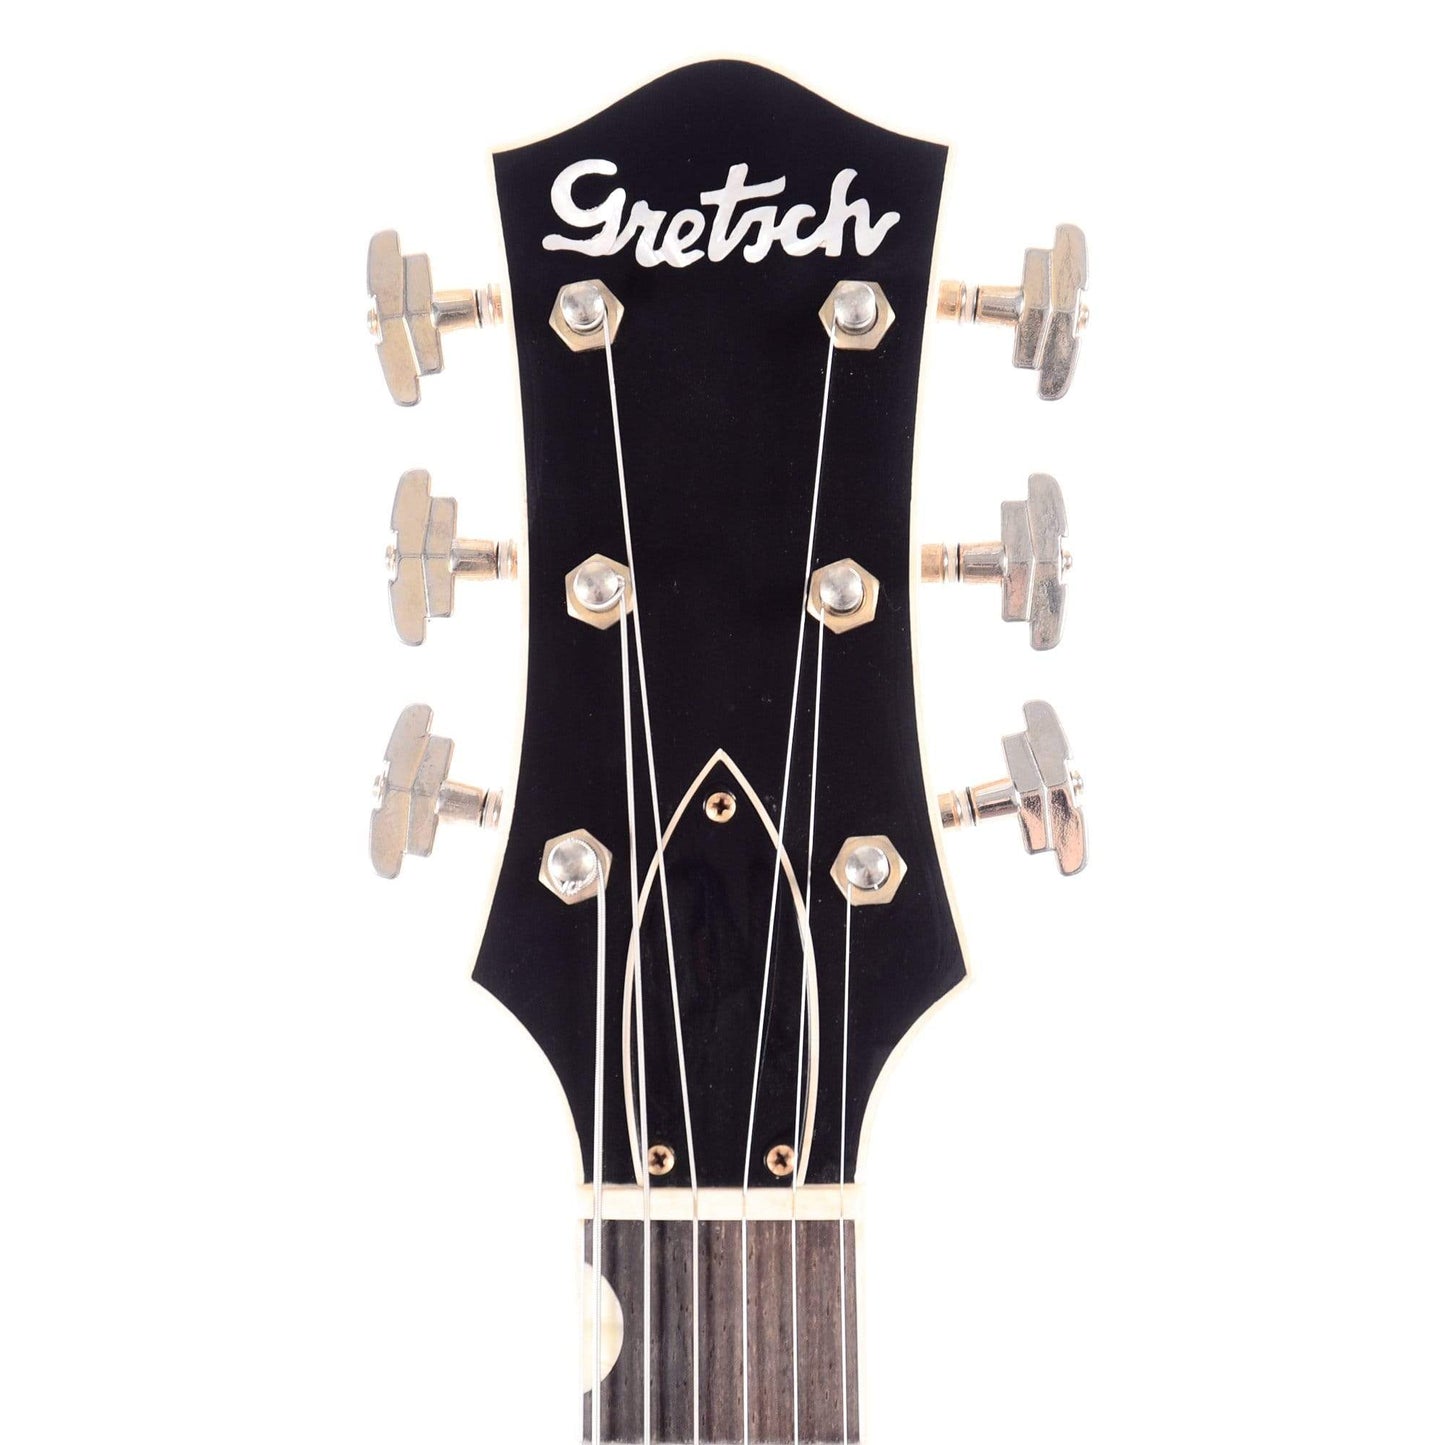 Gretsch Custom Shop Korina Caddy Bo Relic w/Brazilian Rosewood Fingerboard & ThroBak SLE-101 Pickups Masterbuilt by Stephen Stern Electric Guitars / Solid Body